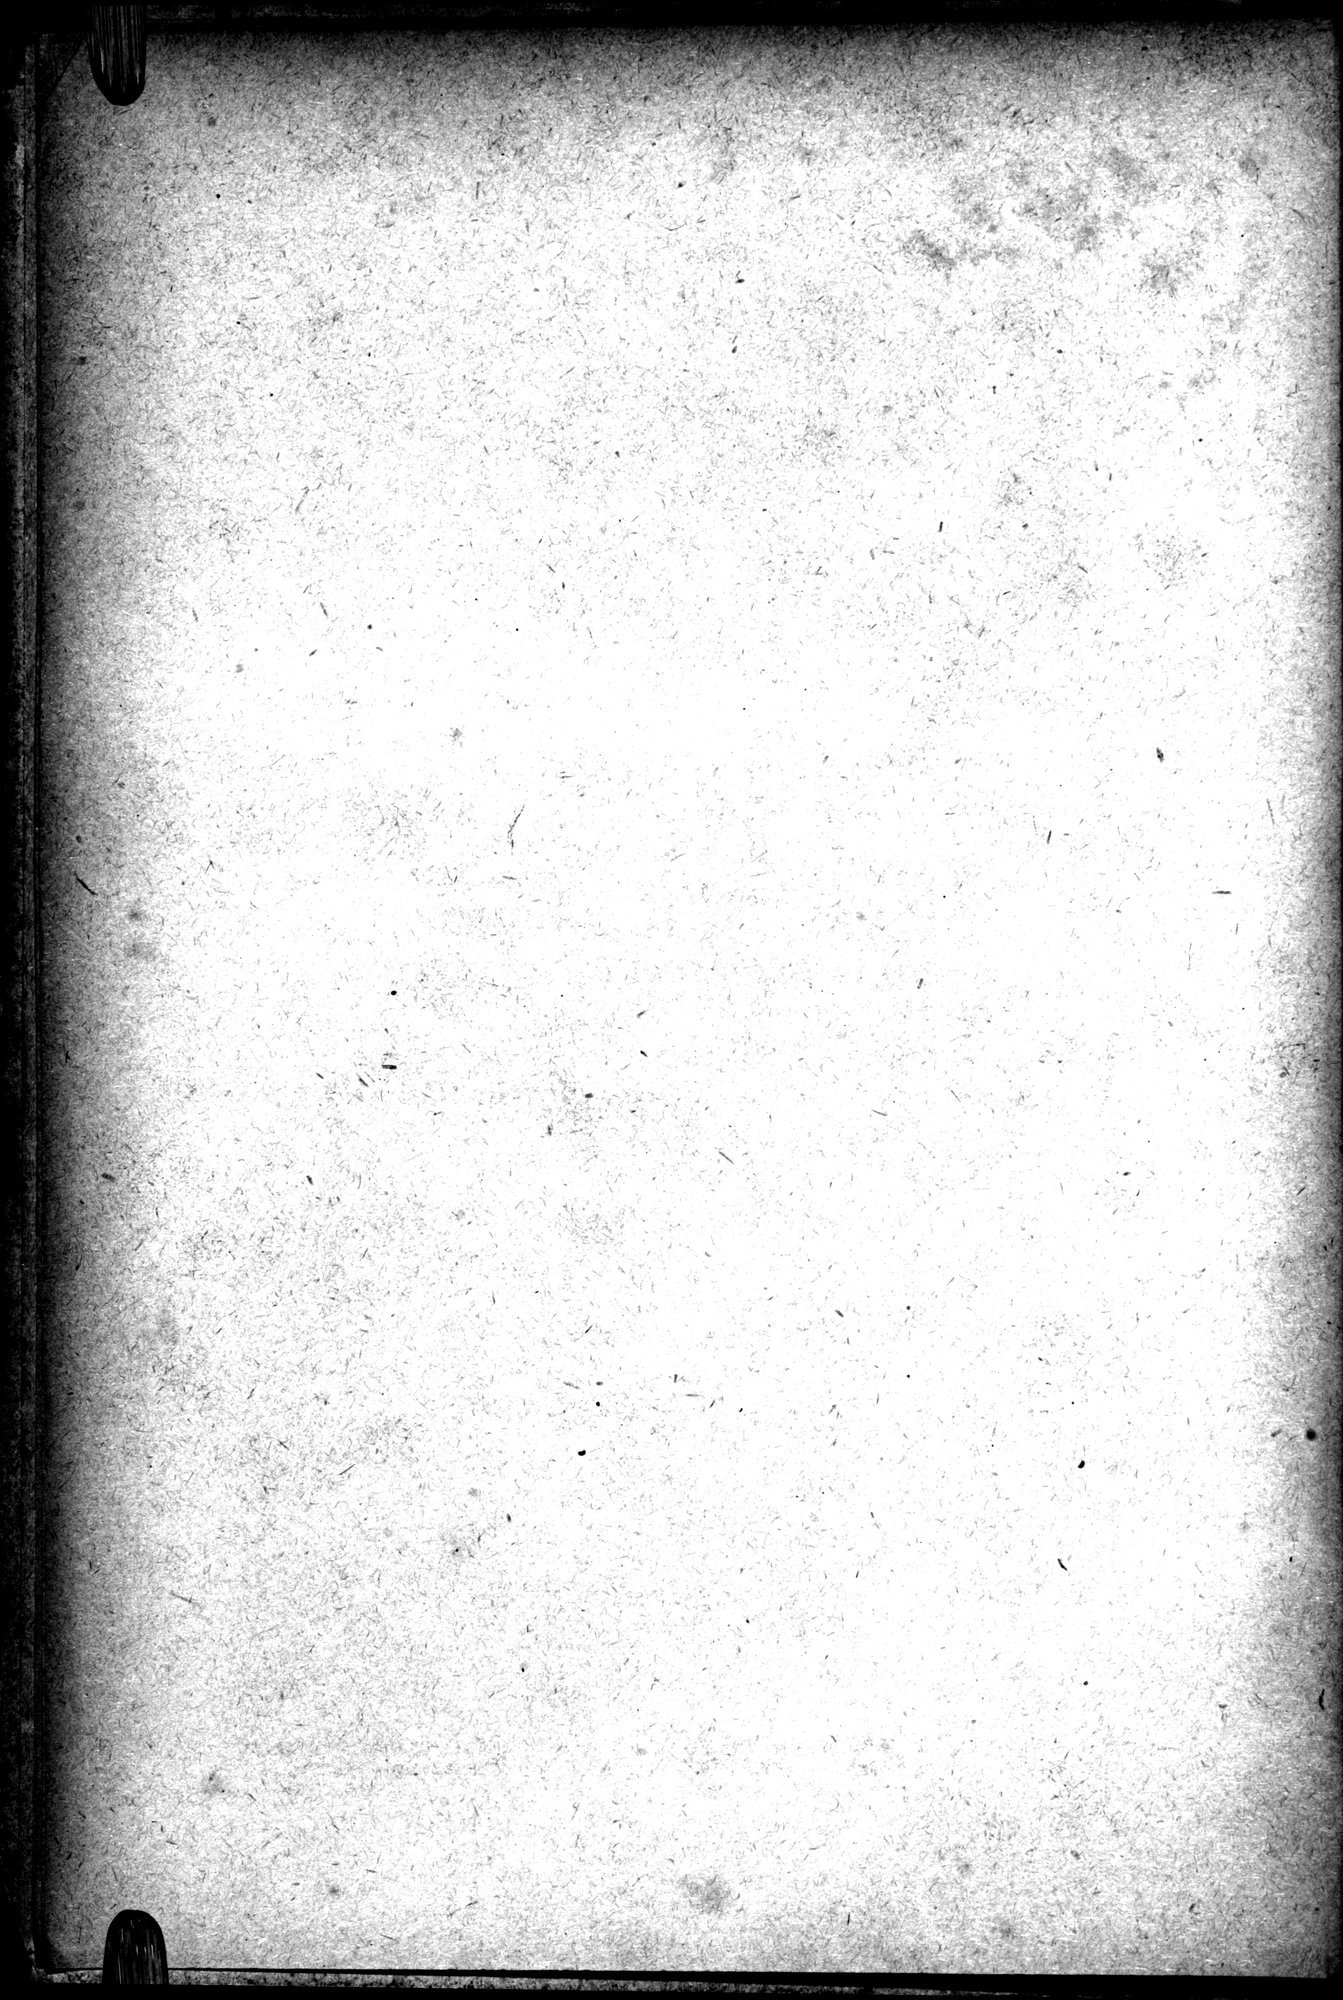 Mongoliya i Amdo i mertby gorod Khara-Khoto : vol.1 / Page 12 (Grayscale High Resolution Image)